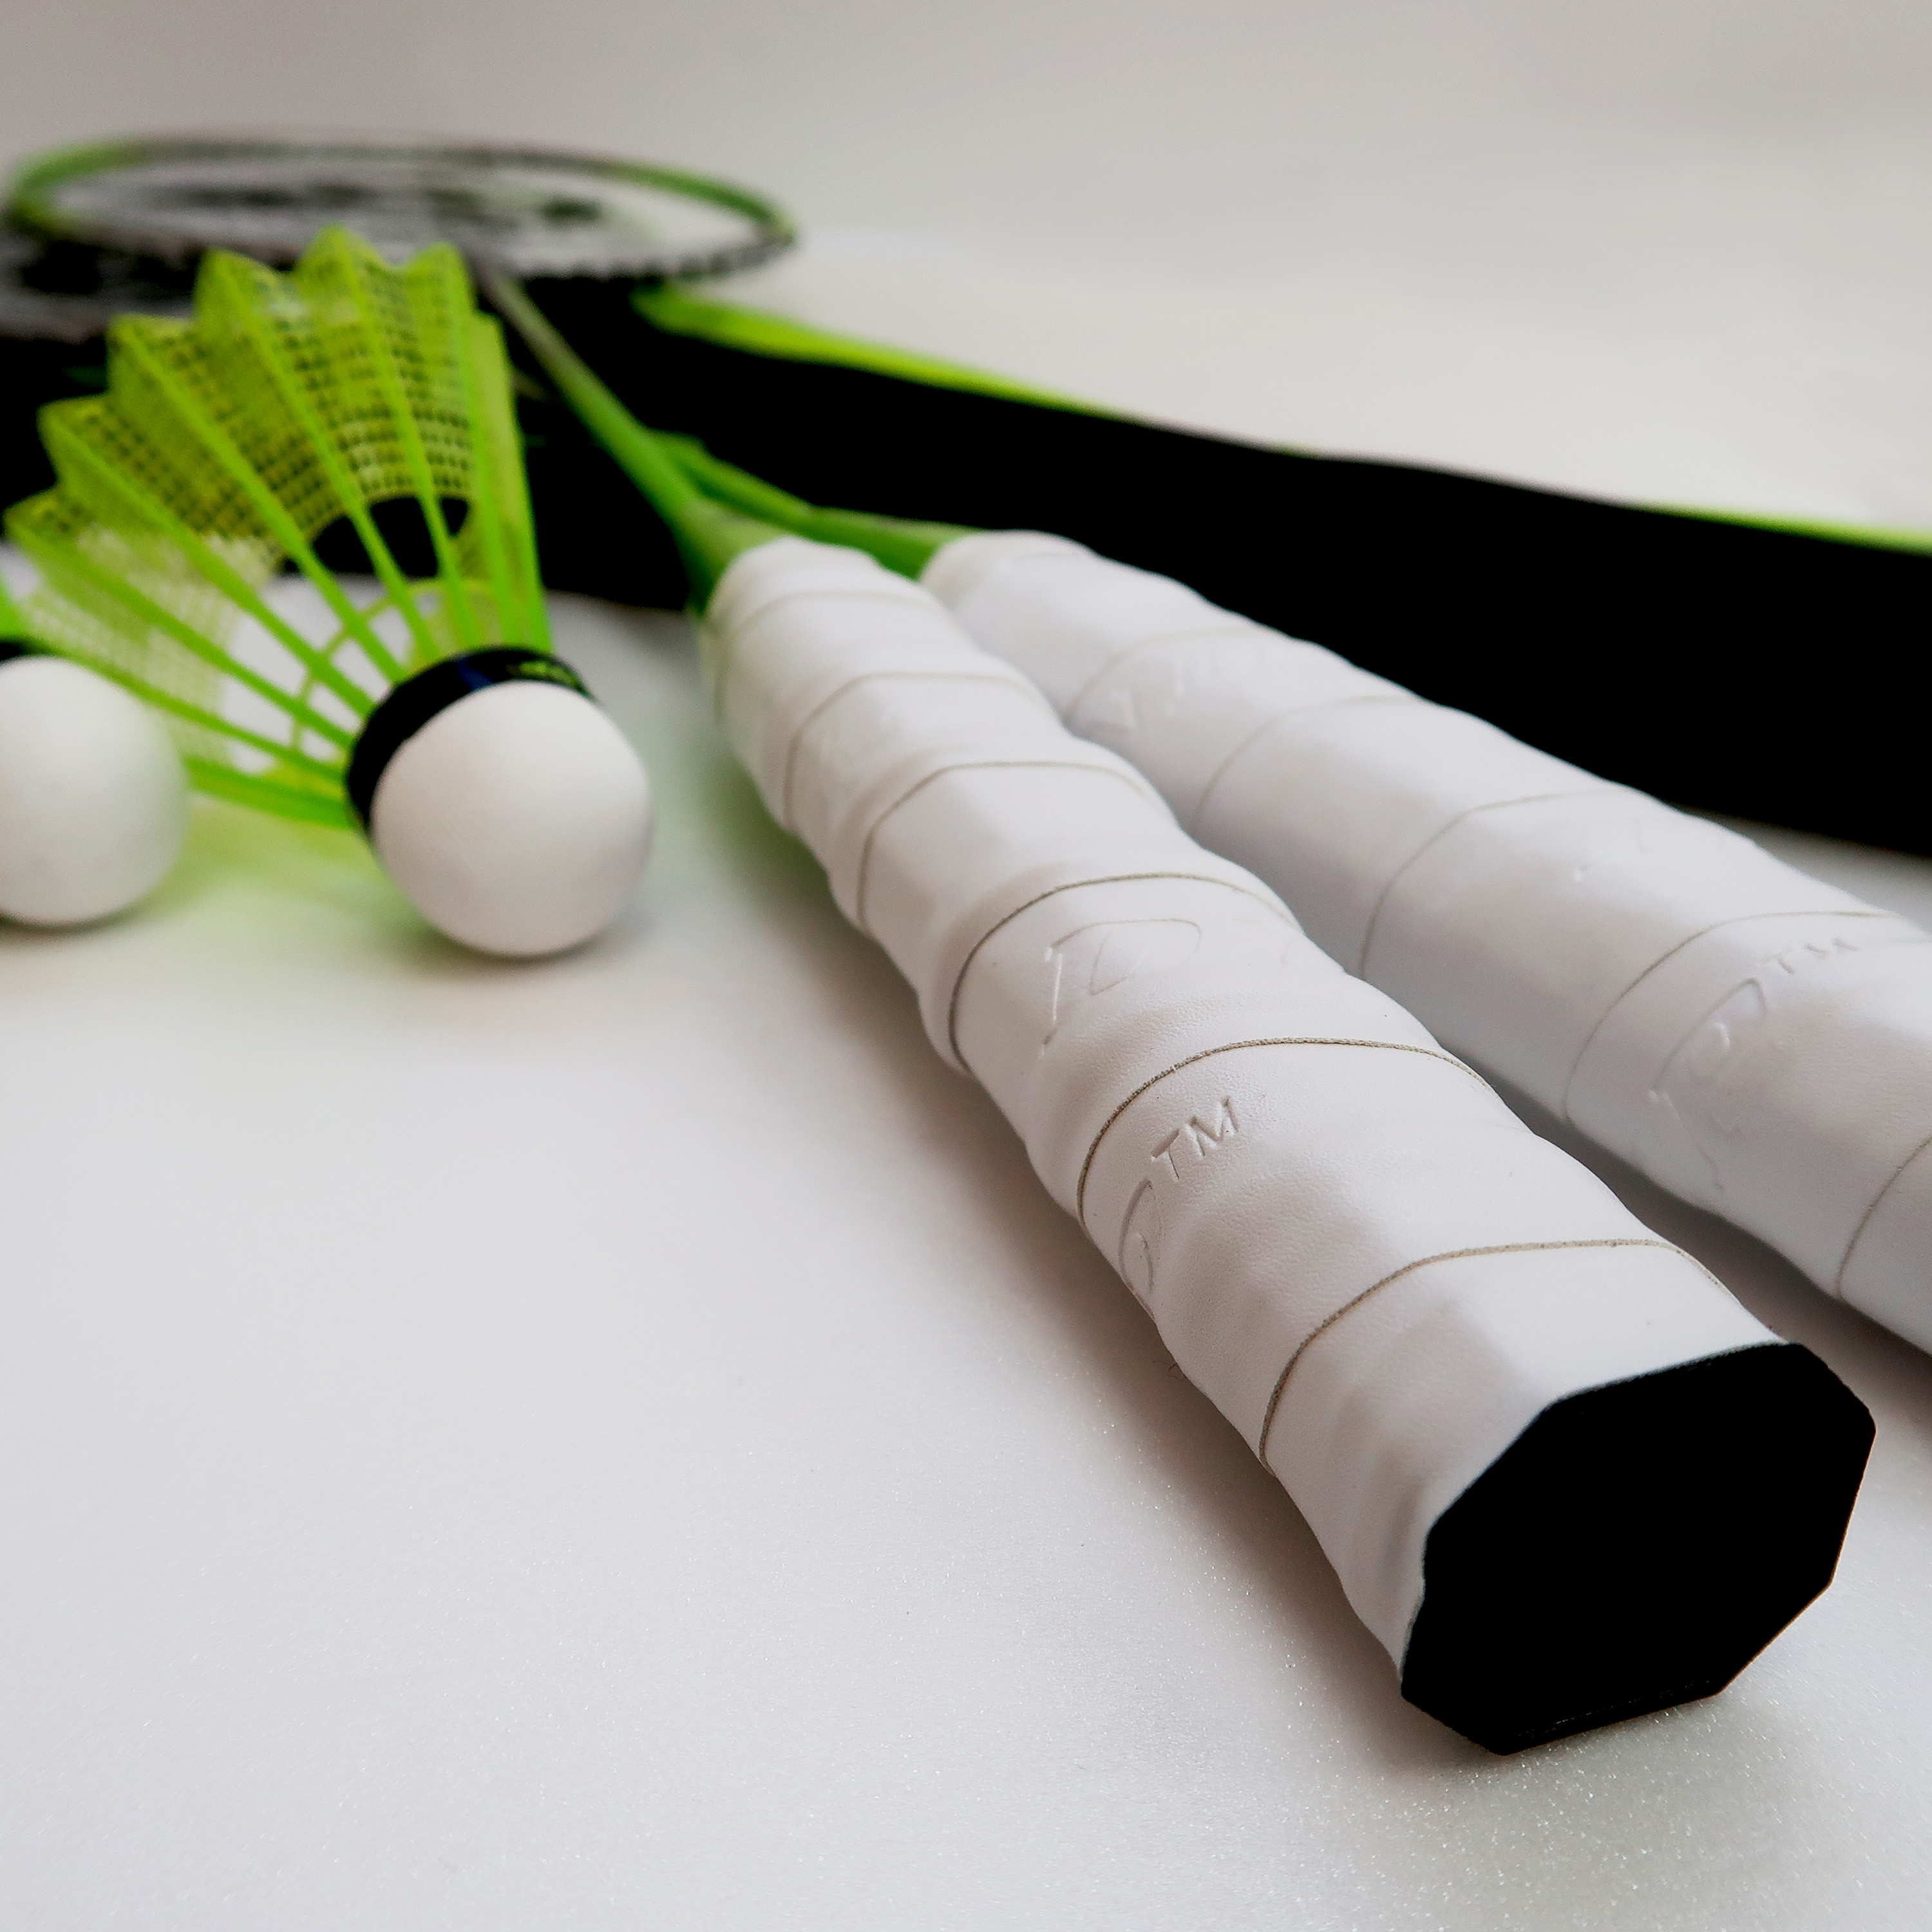 Dunlop 2-Player Premium Badminton Racquet Set - One Piece Aluminum Frame - image 5 of 6